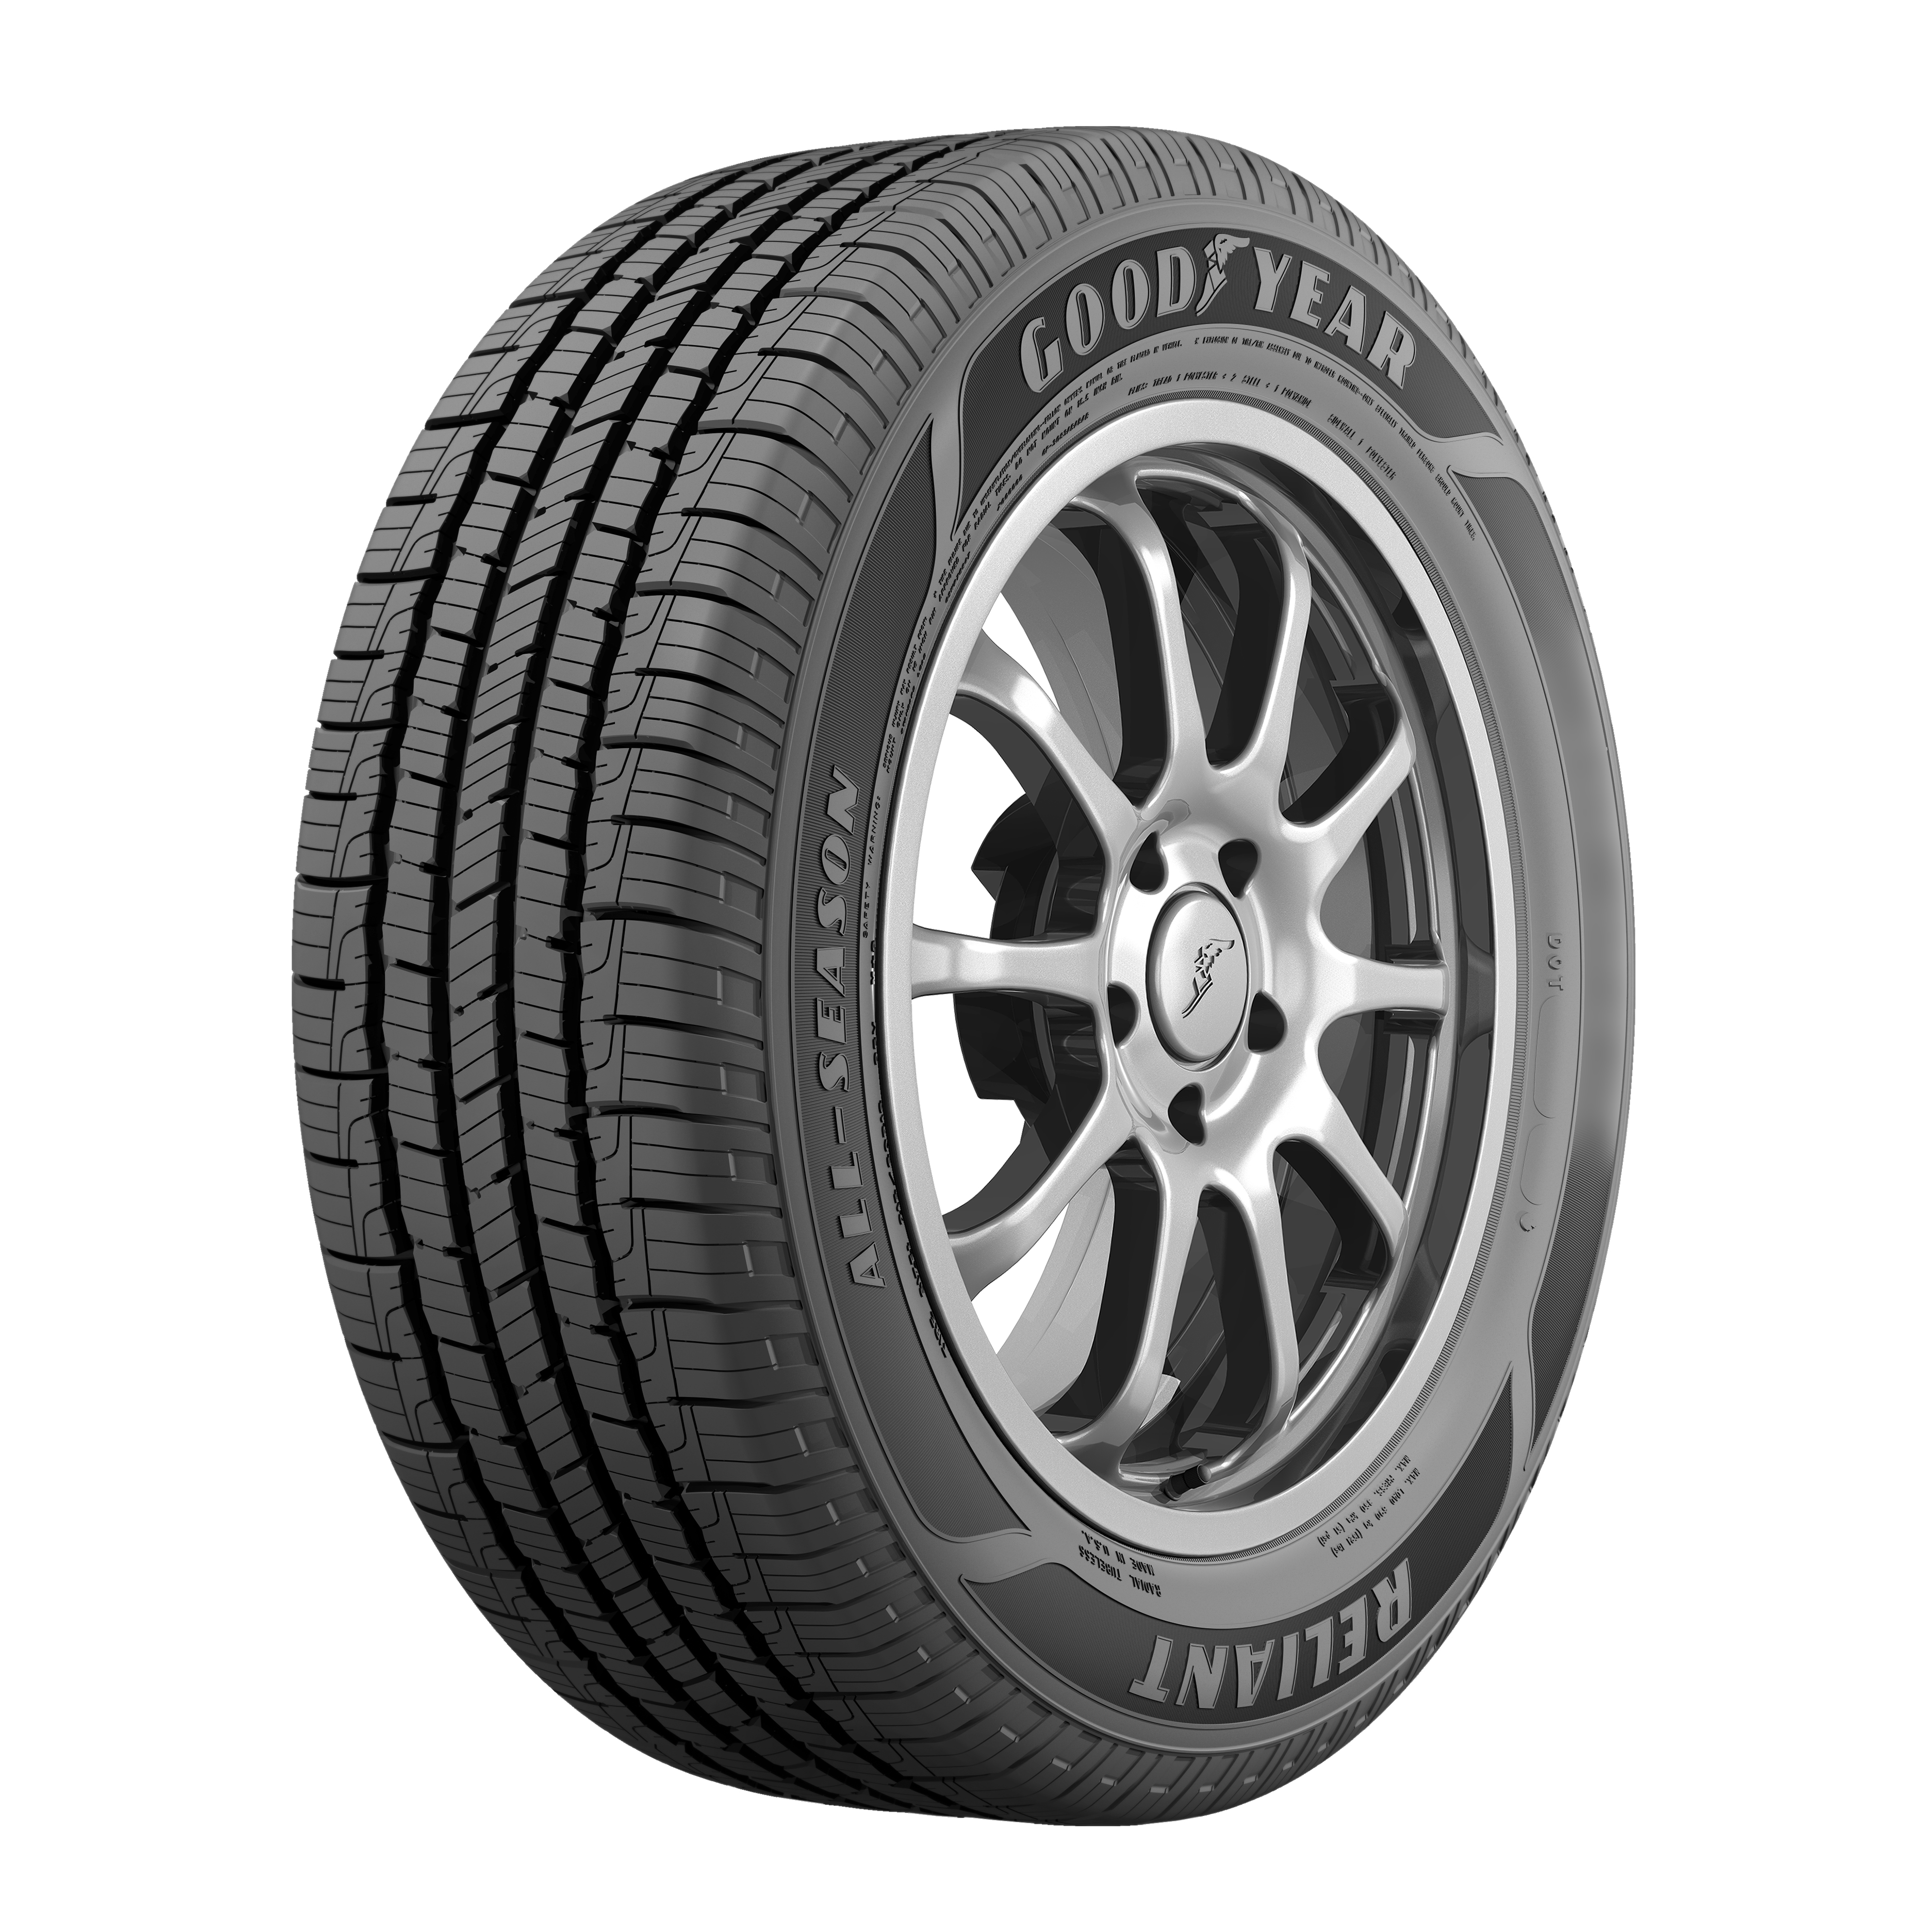 Goodyear Reliant All-Season 225/60R16 98H All-Season Tire - image 1 of 8